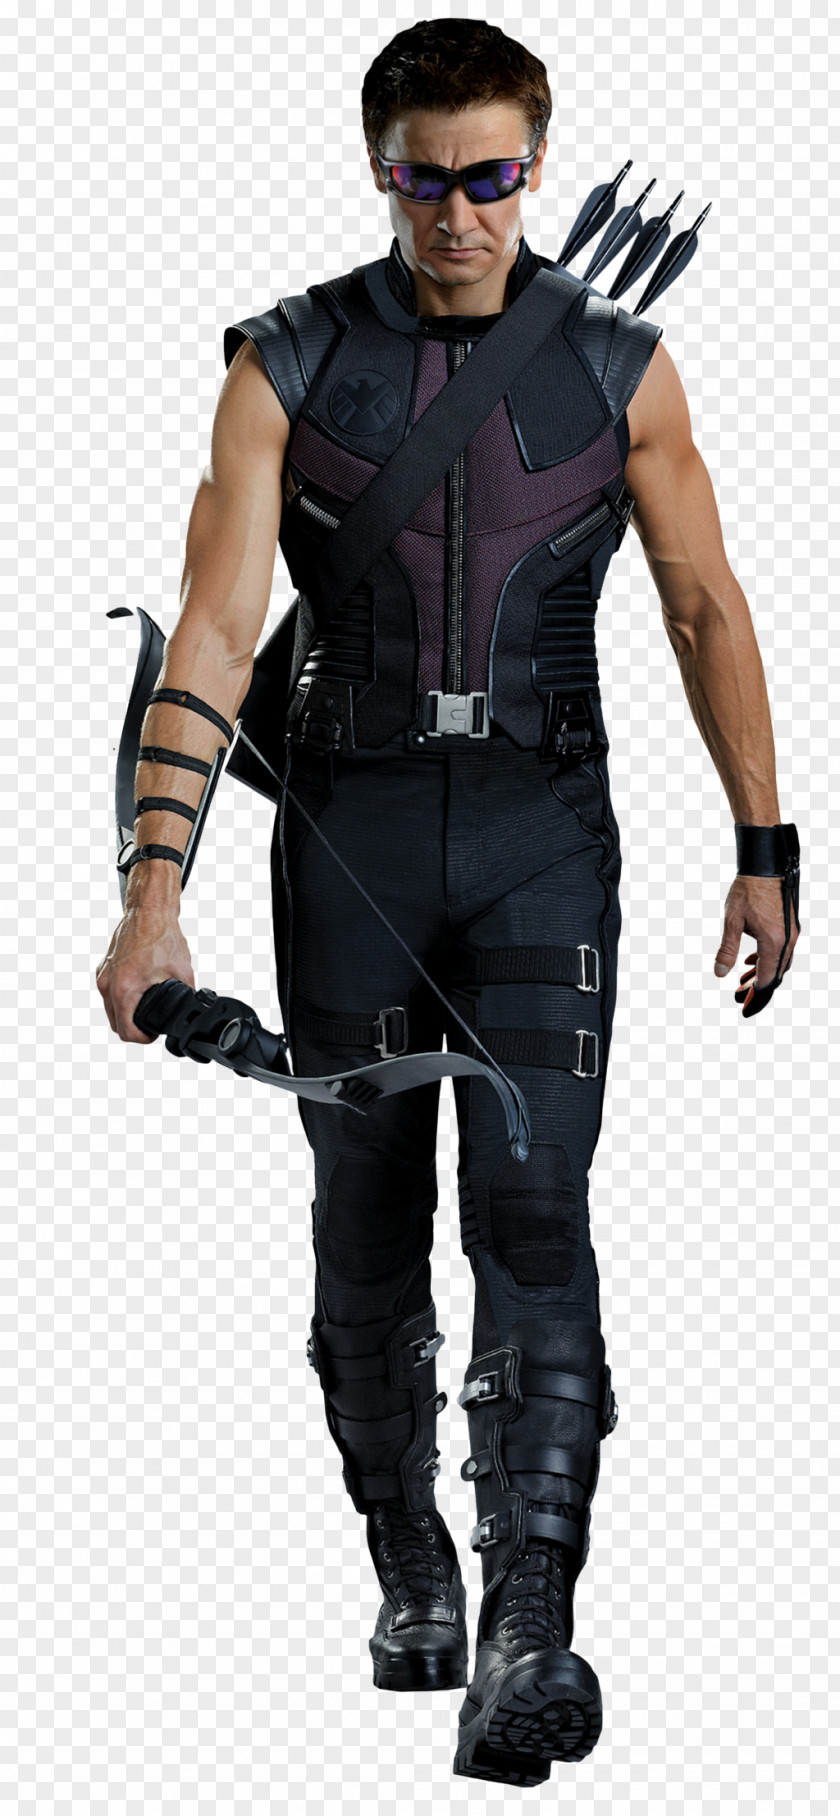 Hawkeye Jeremy Renner Clint Barton Black Widow Captain America Avengers: Age Of Ultron PNG